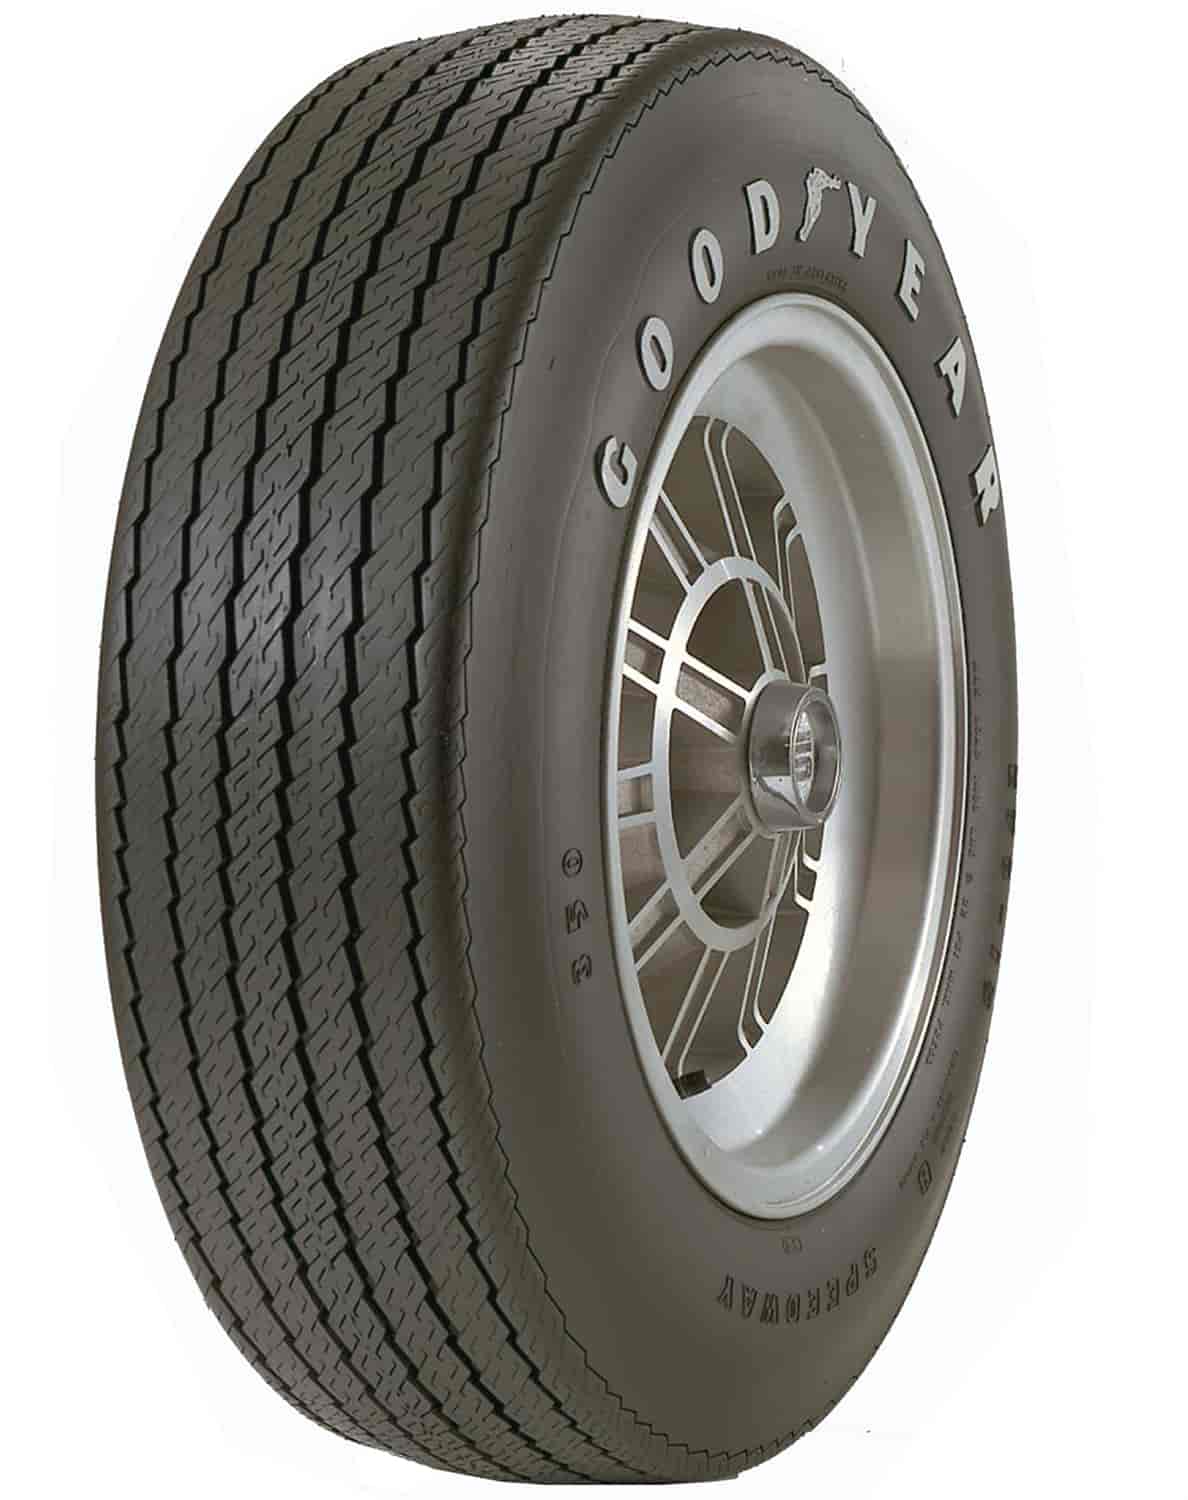 Goodyear Collector Series Speedway 350 Tire